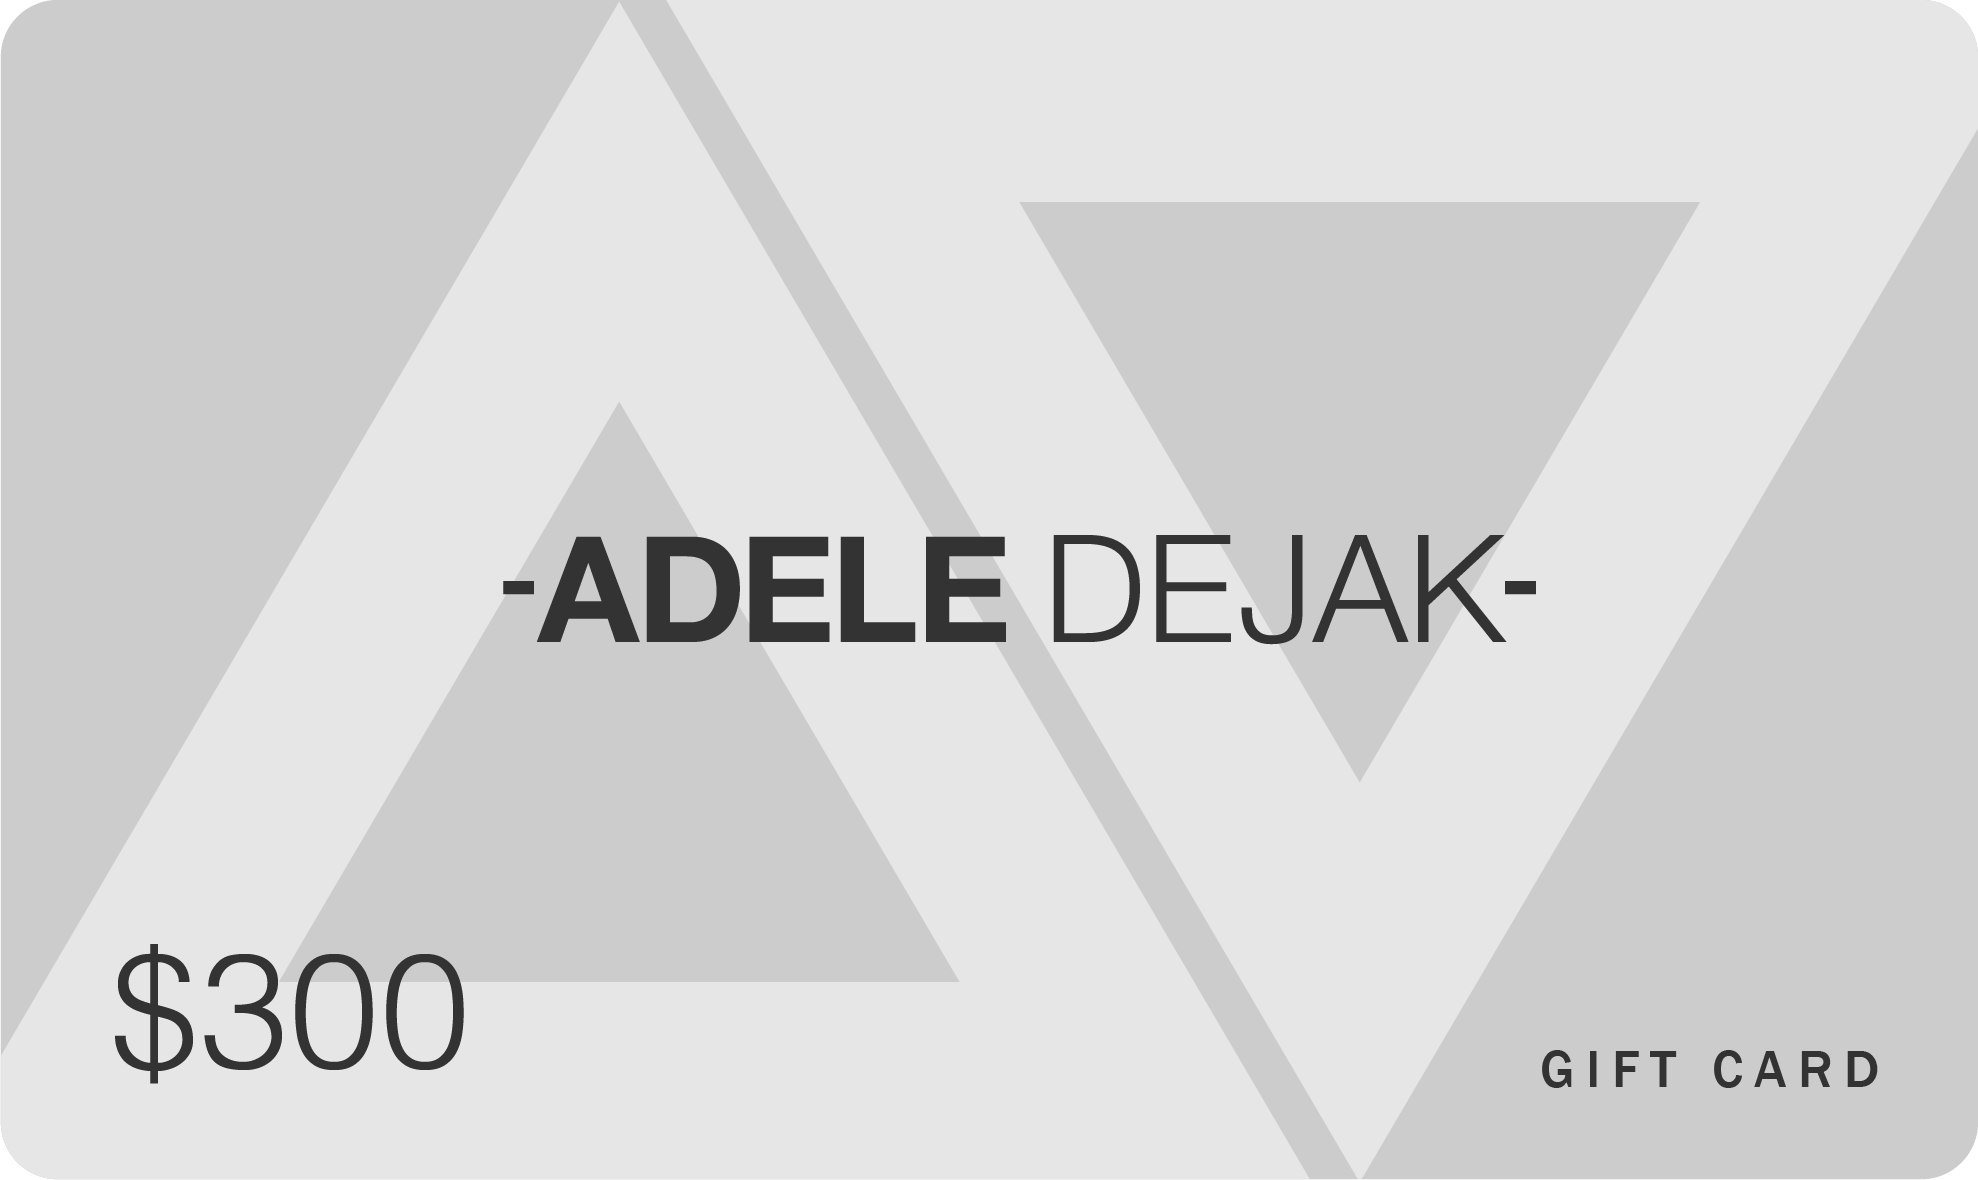 Adele Dejak Gift Card